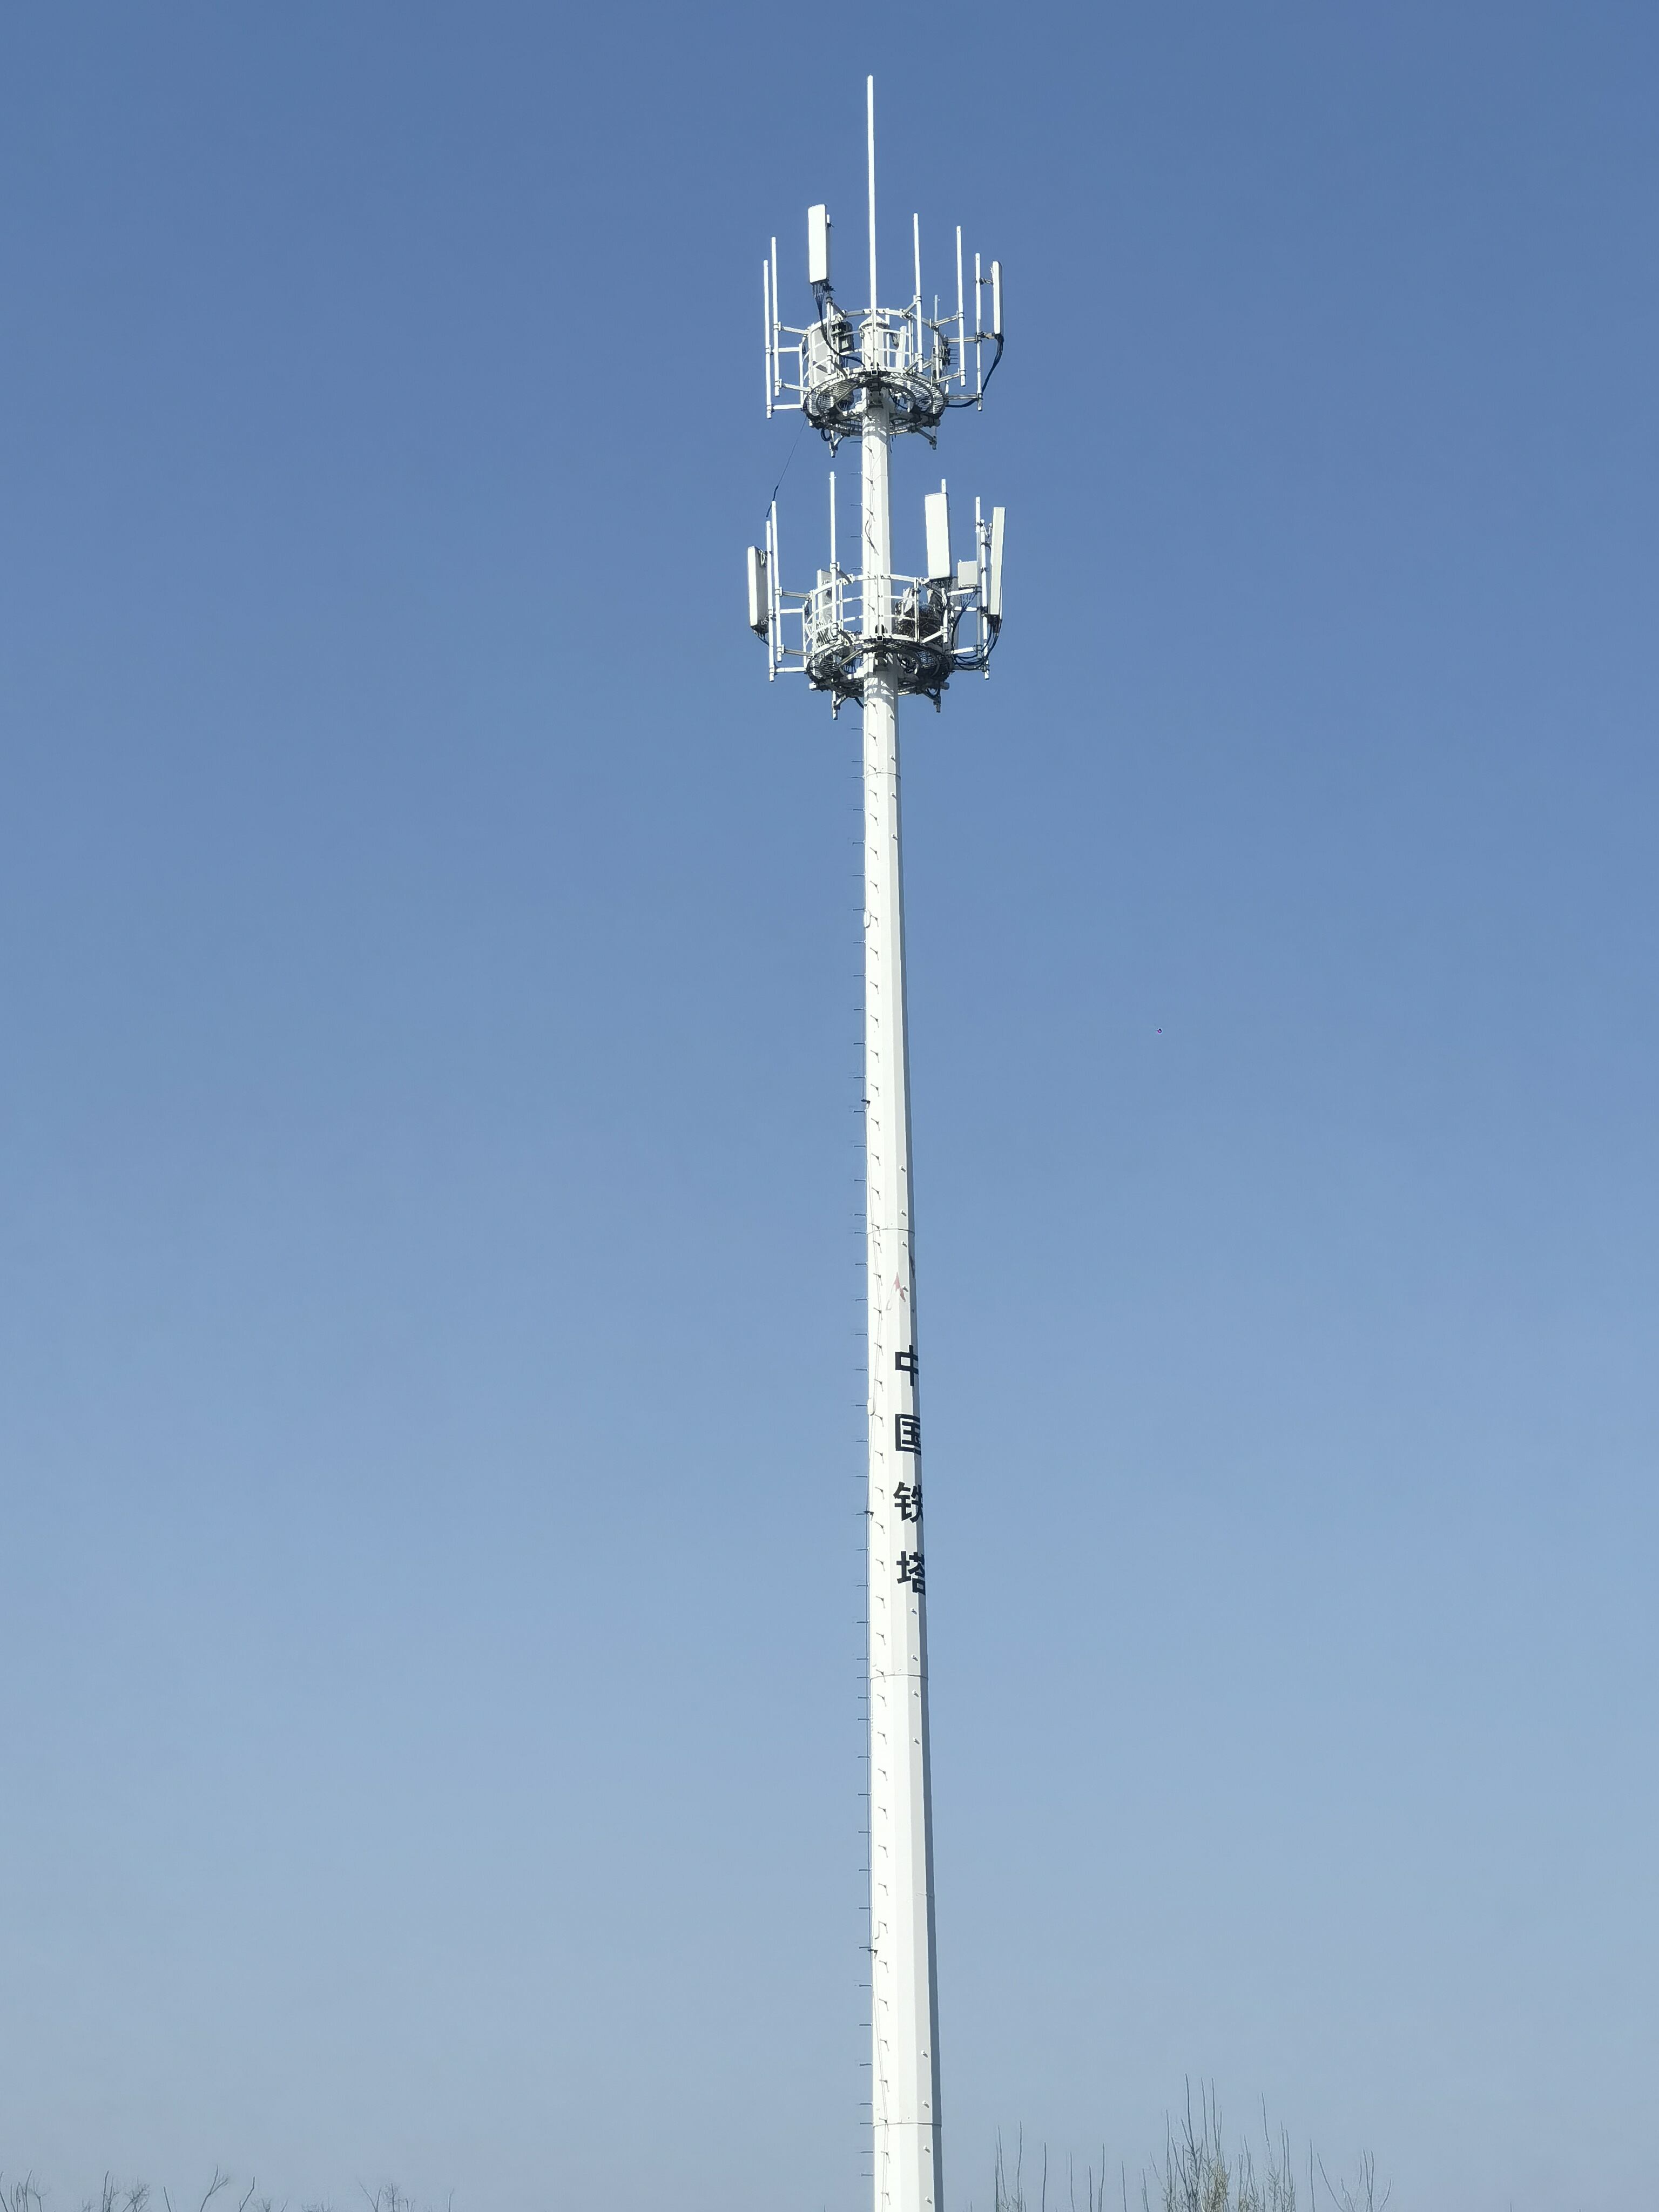 Monopole Tower Antenna Communication Transmission manufacture